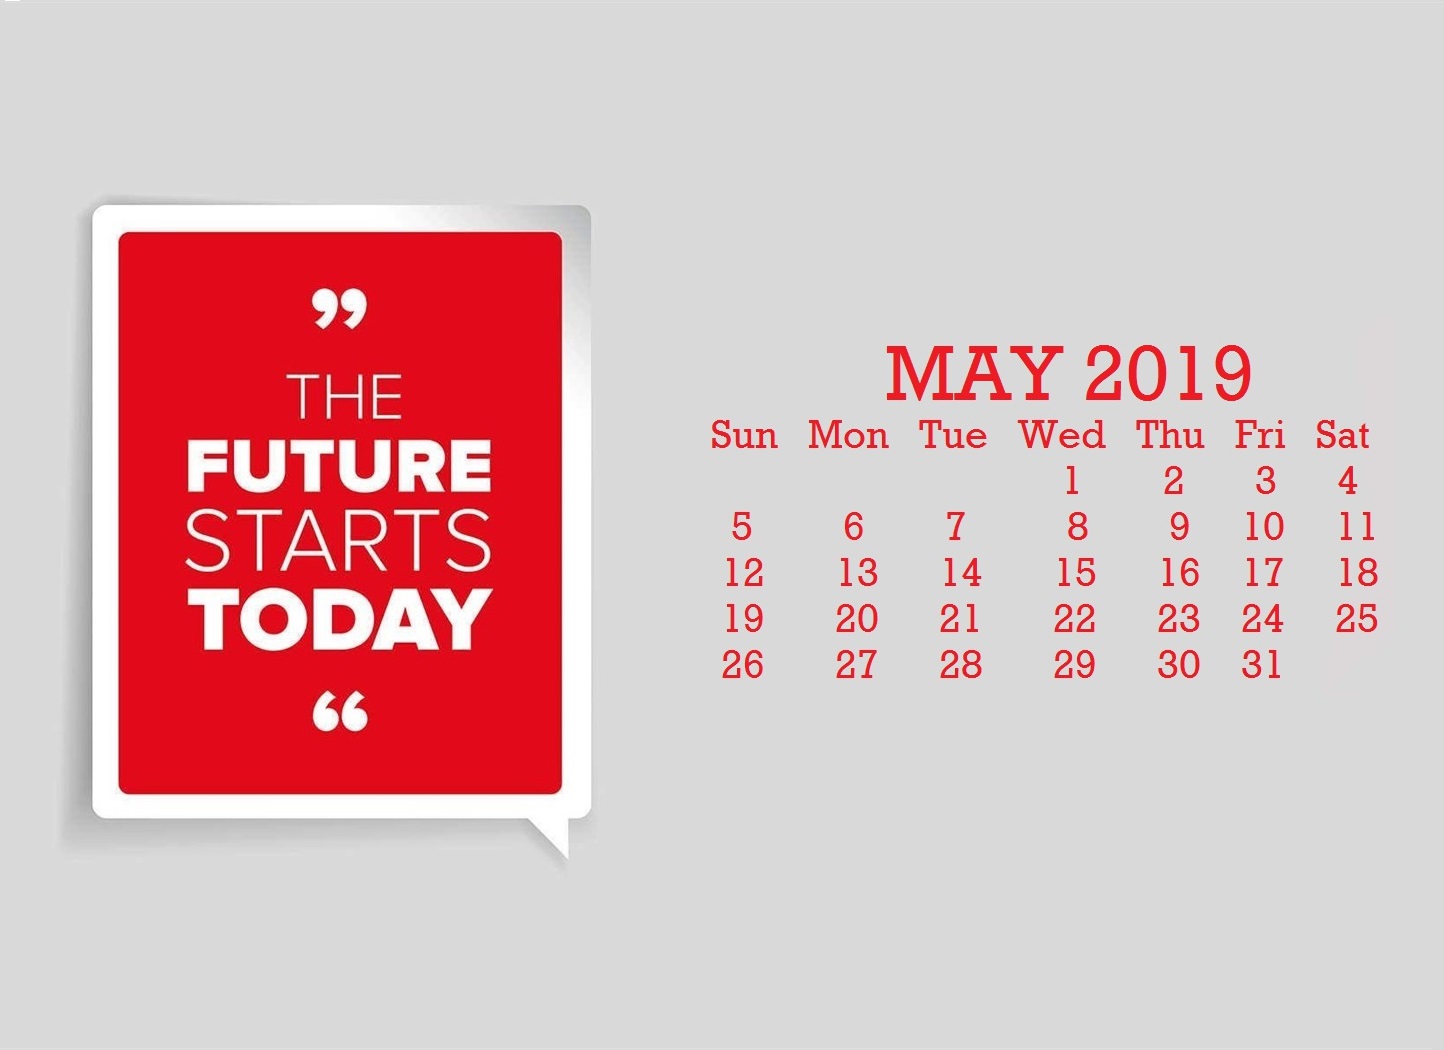 May 2019 Quotes Calendar Wallpaper